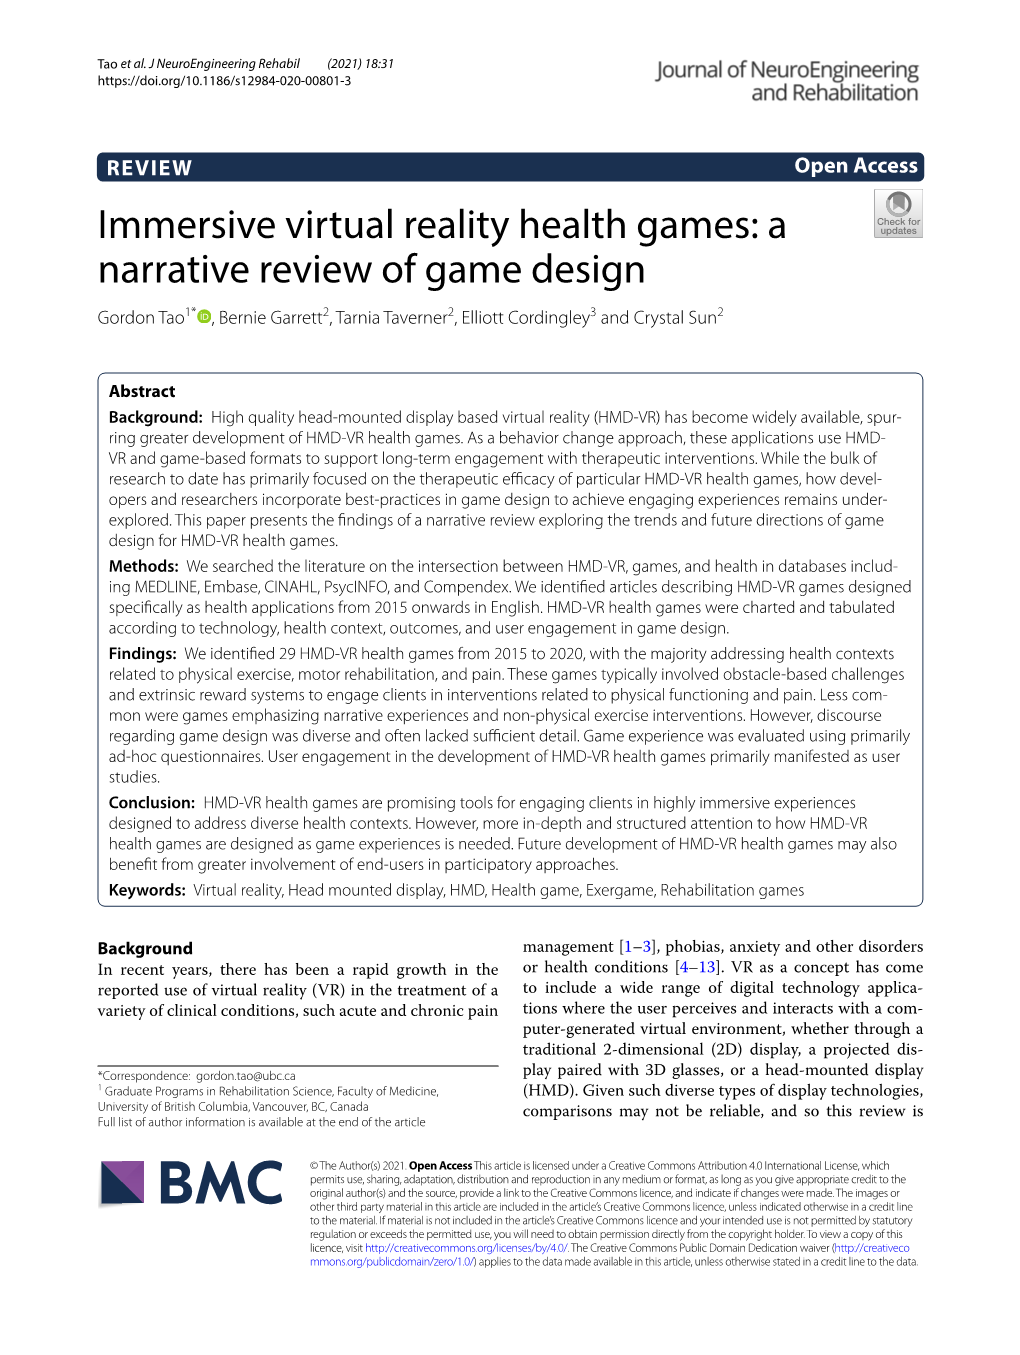 Immersive Virtual Reality Health Games: a Narrative Review of Game Design Gordon Tao1* , Bernie Garrett2, Tarnia Taverner2, Elliott Cordingley3 and Crystal Sun2